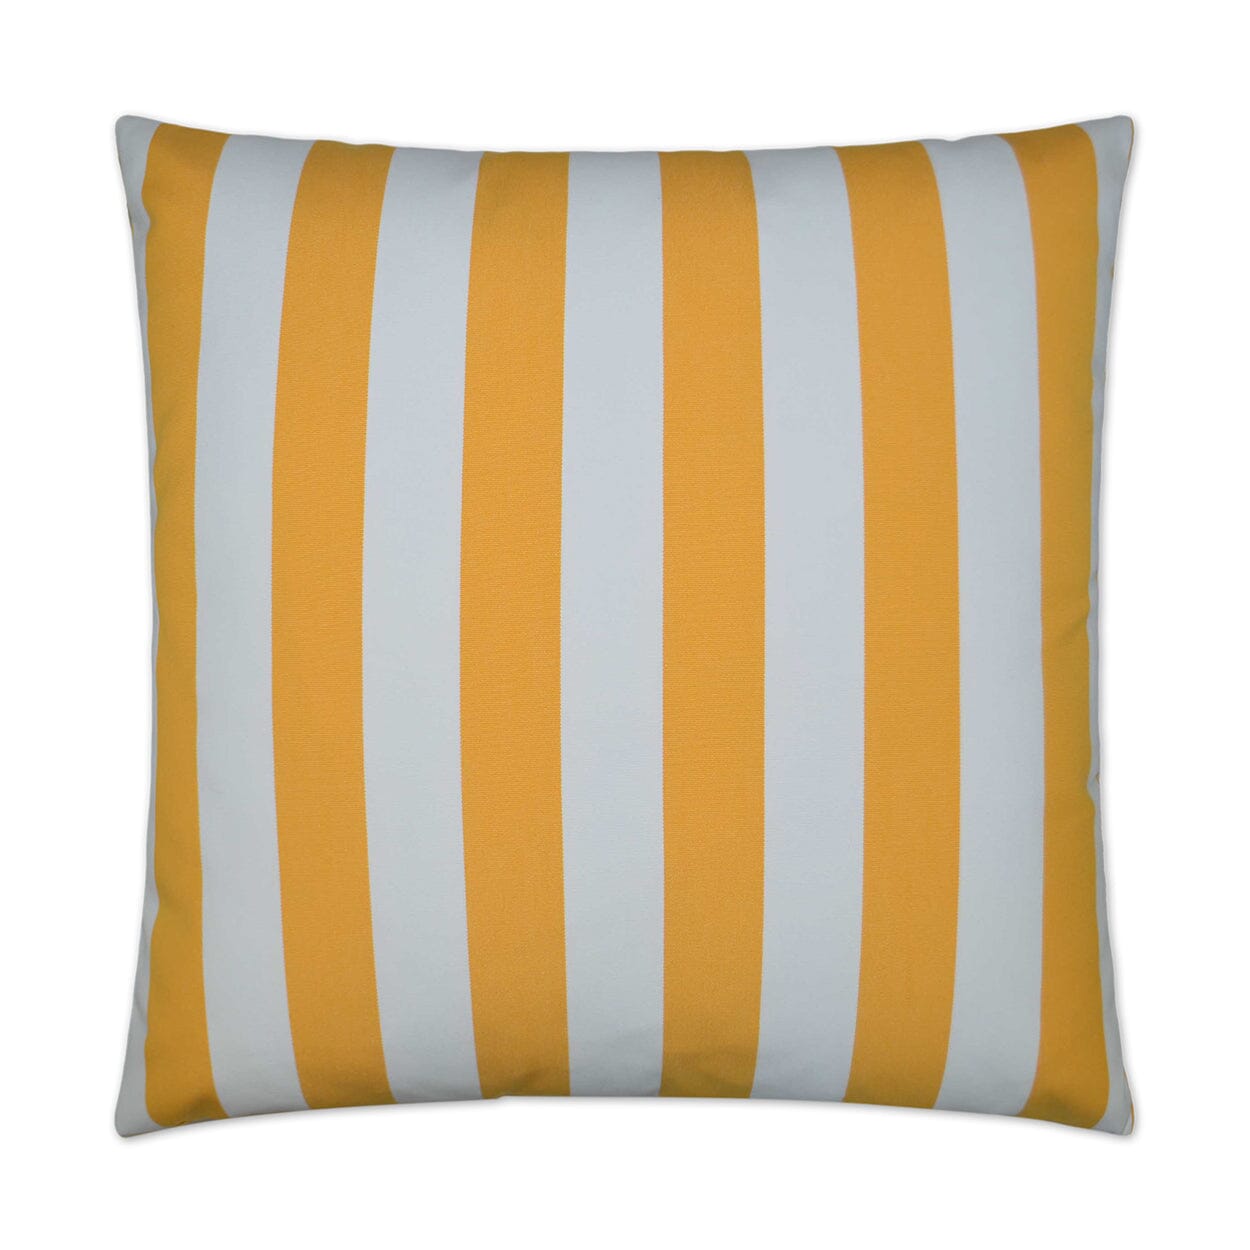 D.V. Kap 22" x 22" Outdoor Throw Pillow | Café Stripe Yellow Pillows D.V Kap Outdoor